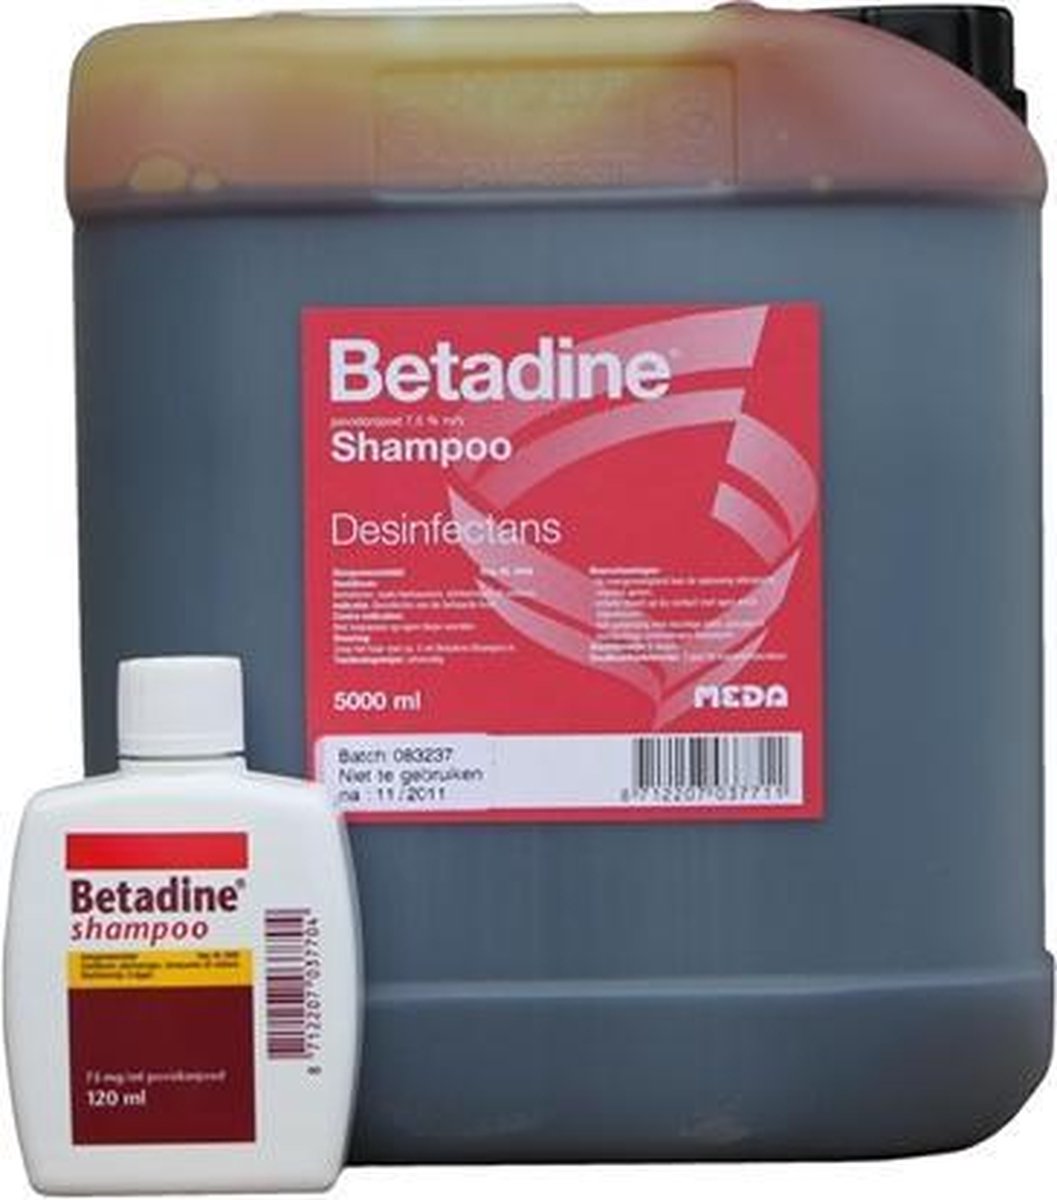 Post impressionisme vermogen mist Betadine shampoo REG NL 3448 | bol.com